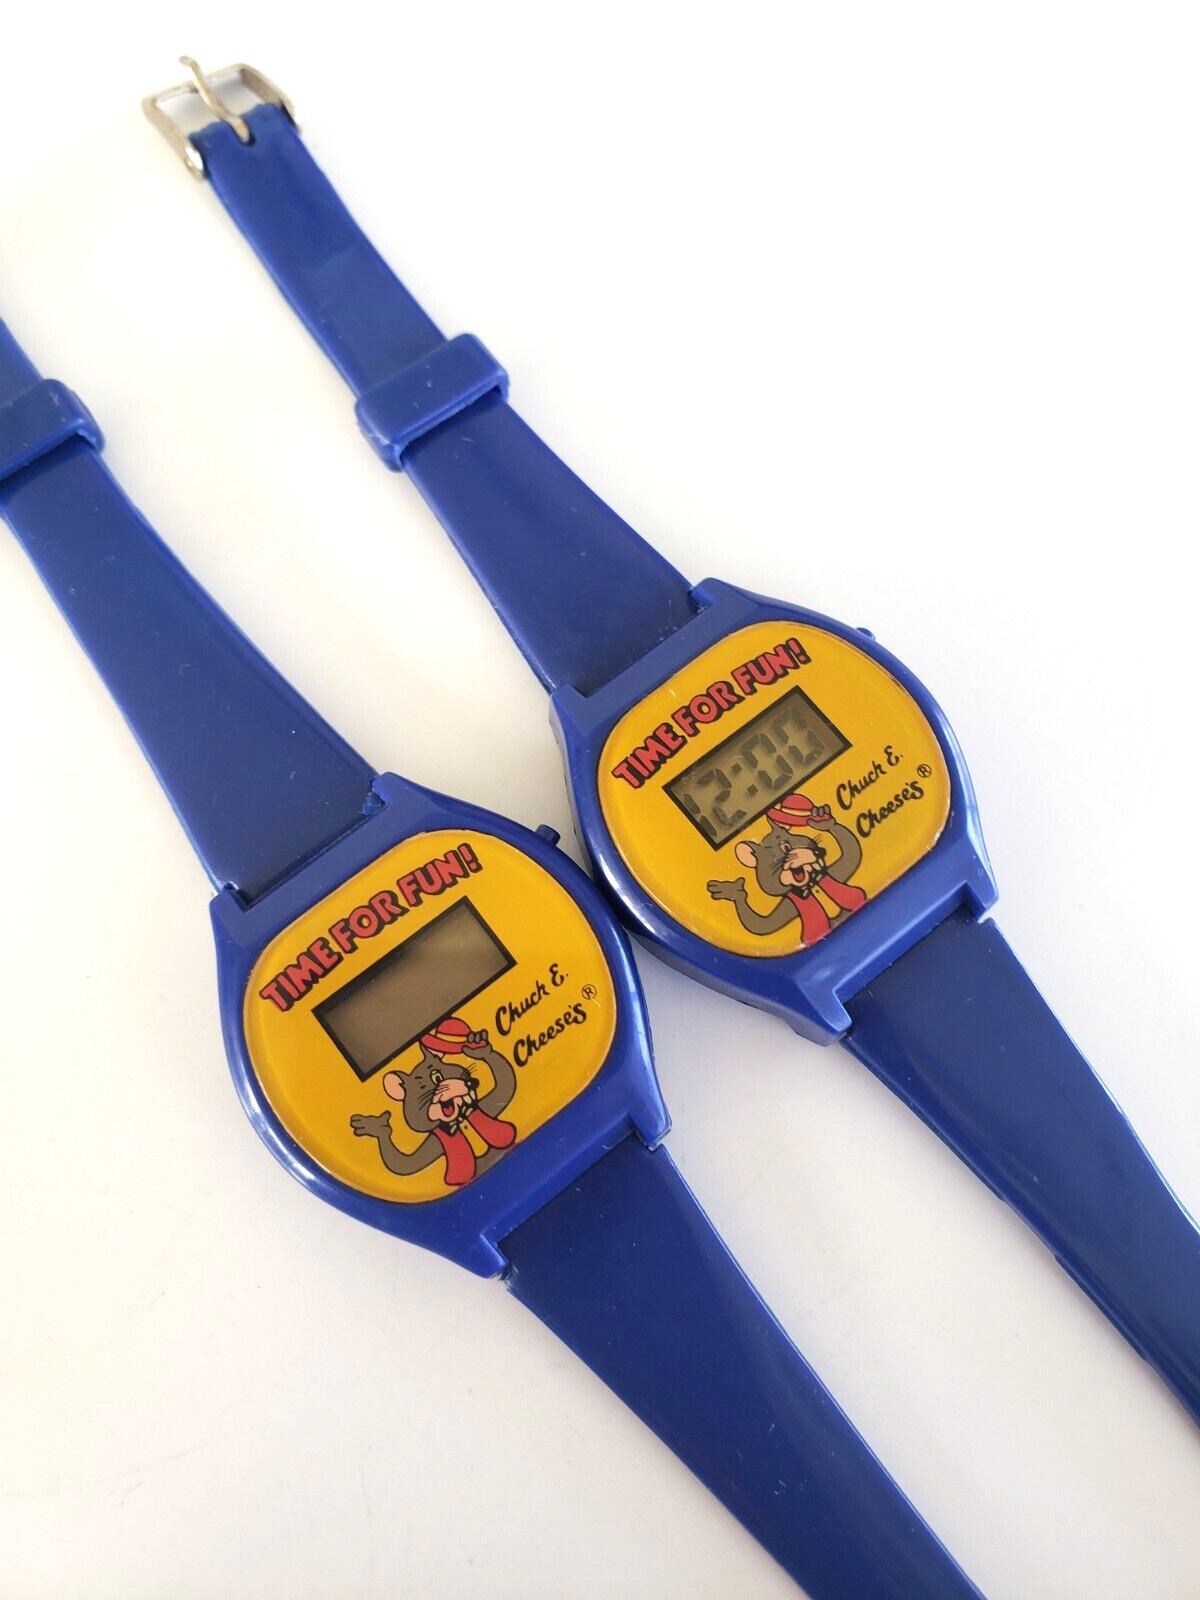 2 Vintage Chuck & Cheeses Plastic Digital Wrist Watch Lot Blue & Yellow